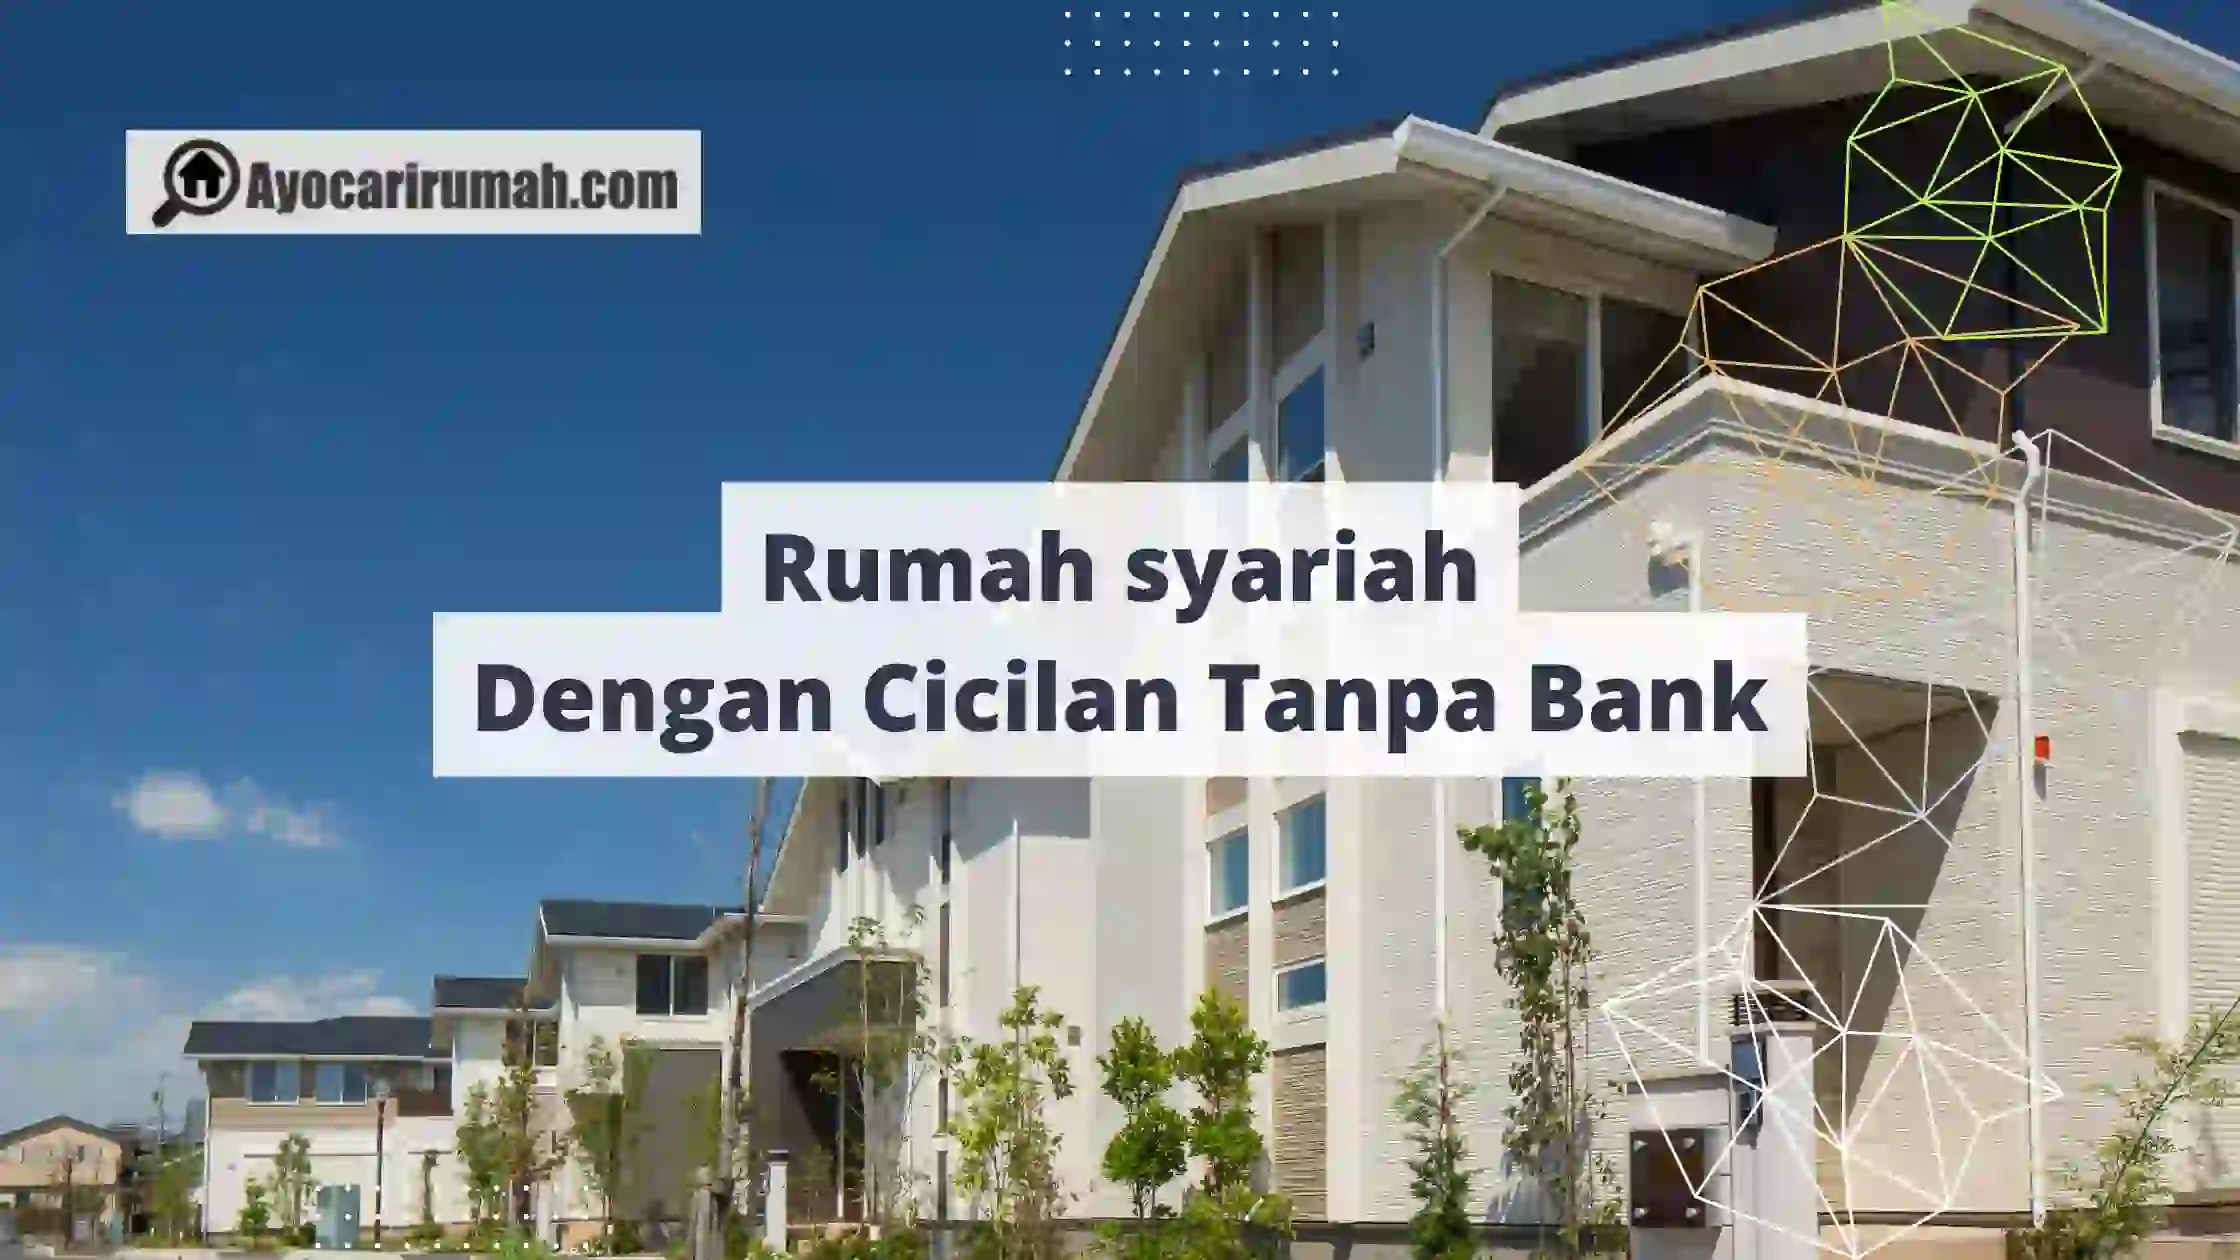 Rumah syariah anpa Bank